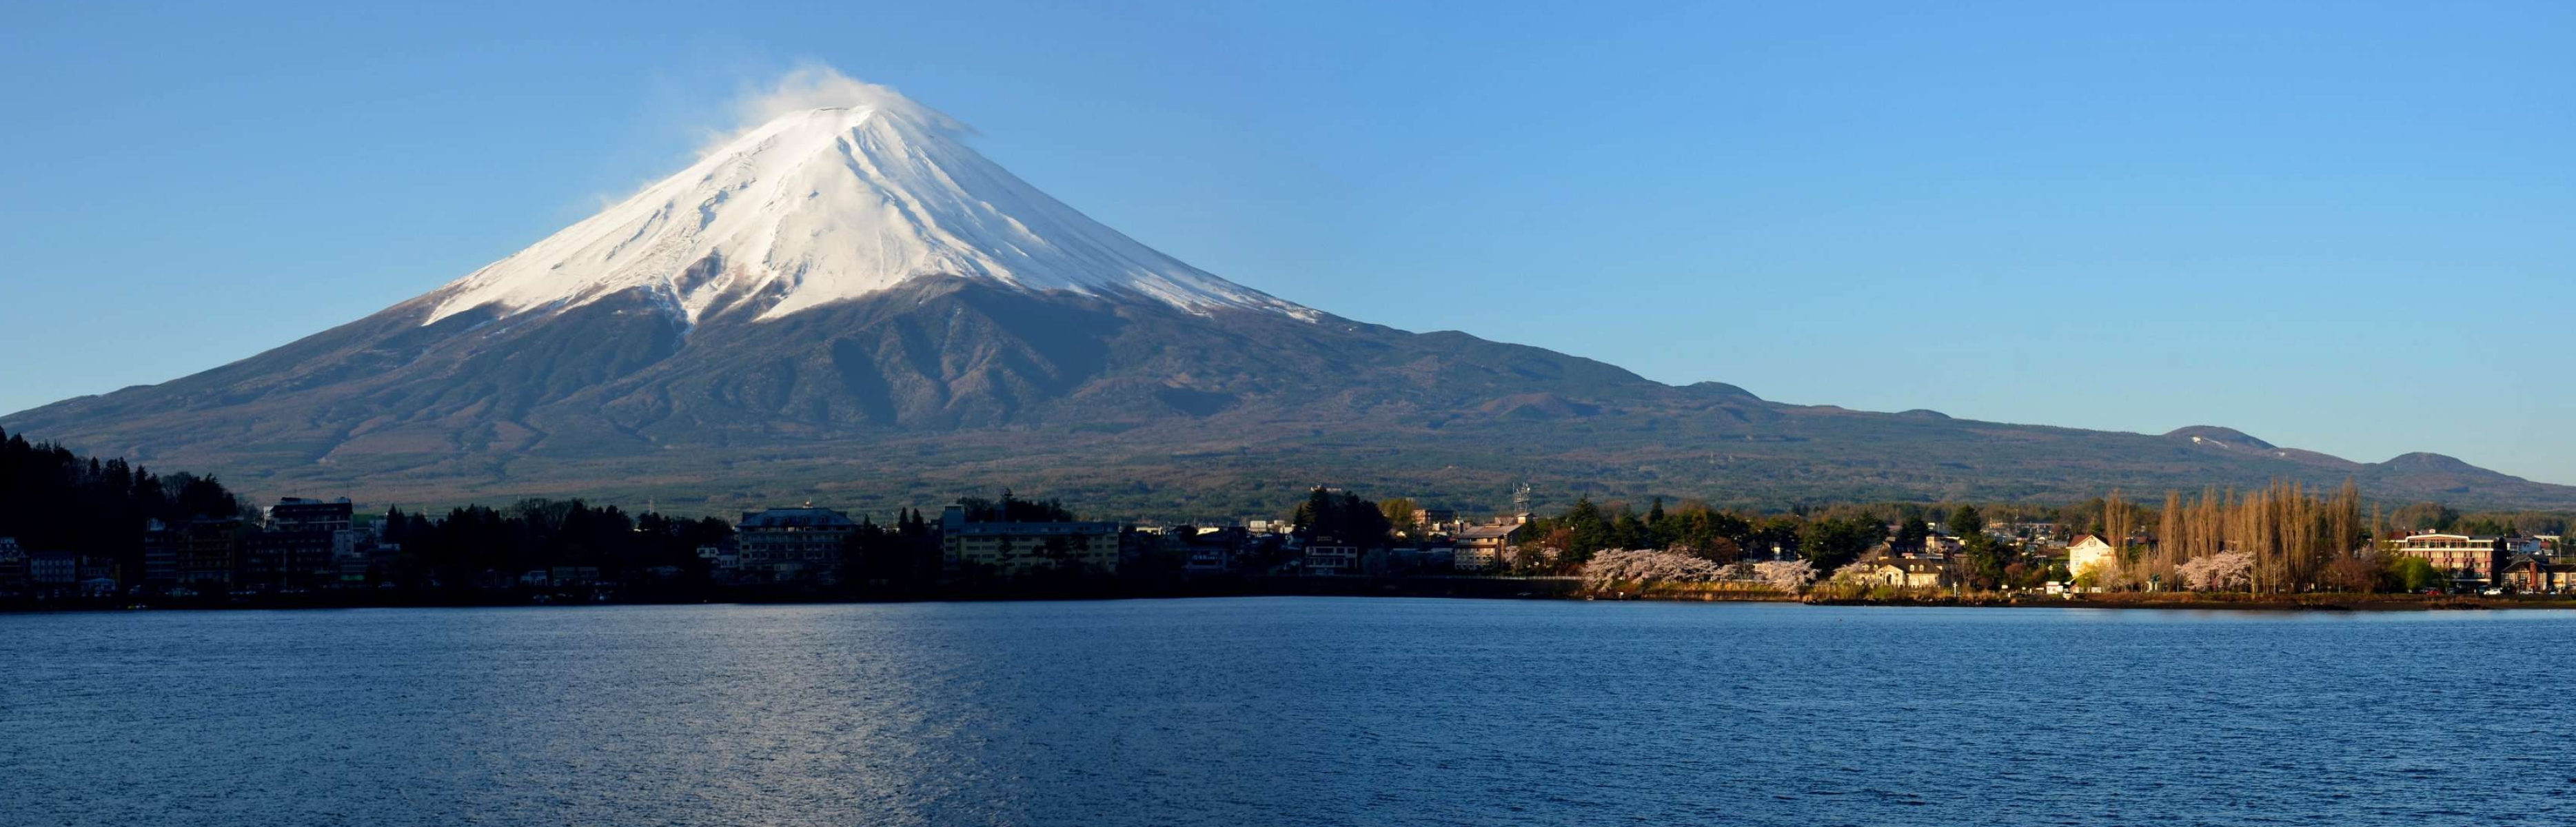 Mount Fuji, Photographic beauty, Majestic Japan, Captivating image, 3740x1200 Dual Screen Desktop